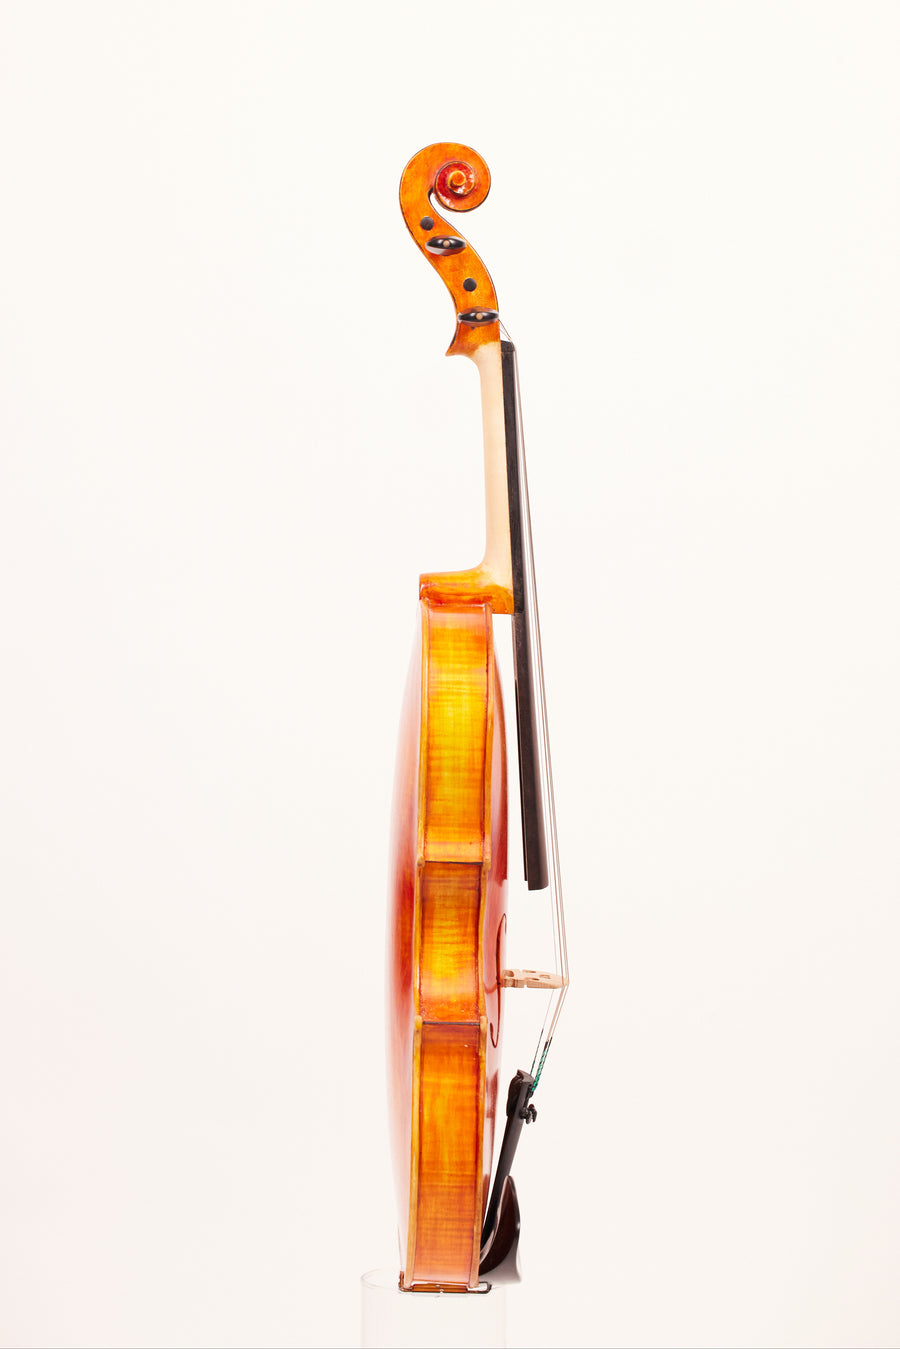 A Contemporary Viola by Daniel Oliver, 2022. 15 7/8”